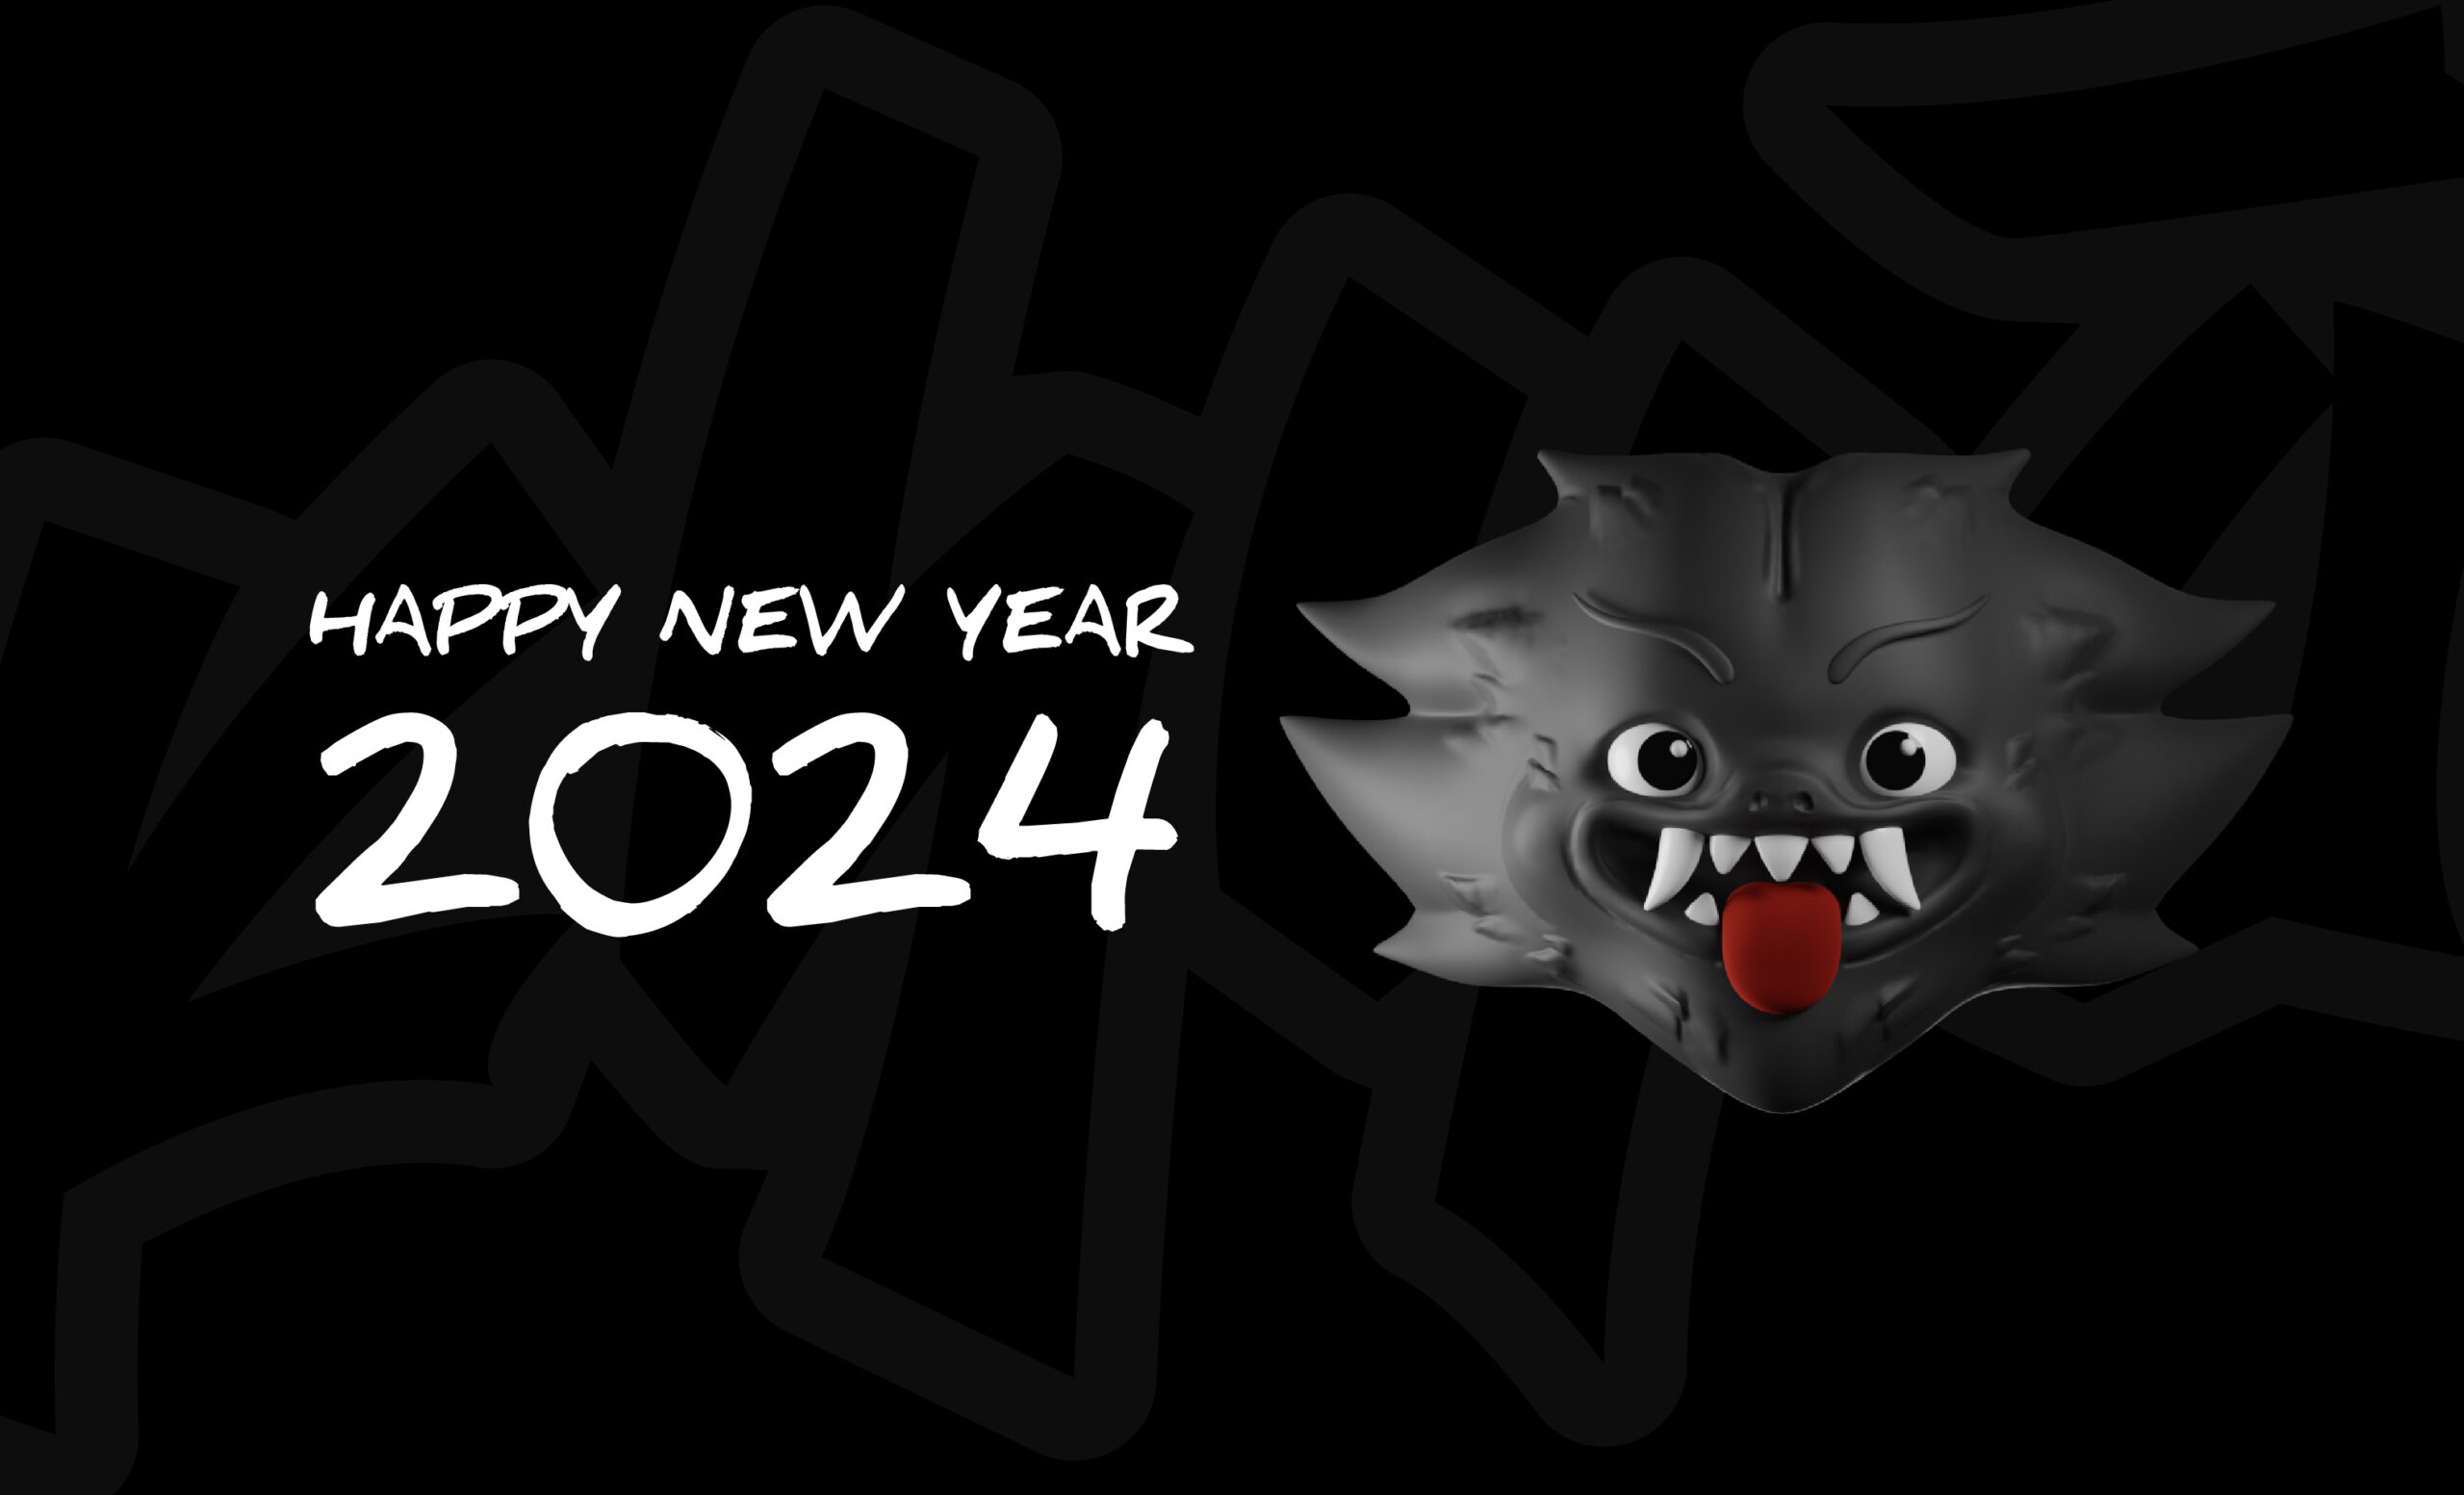 Khya wishes you happy new year 2024